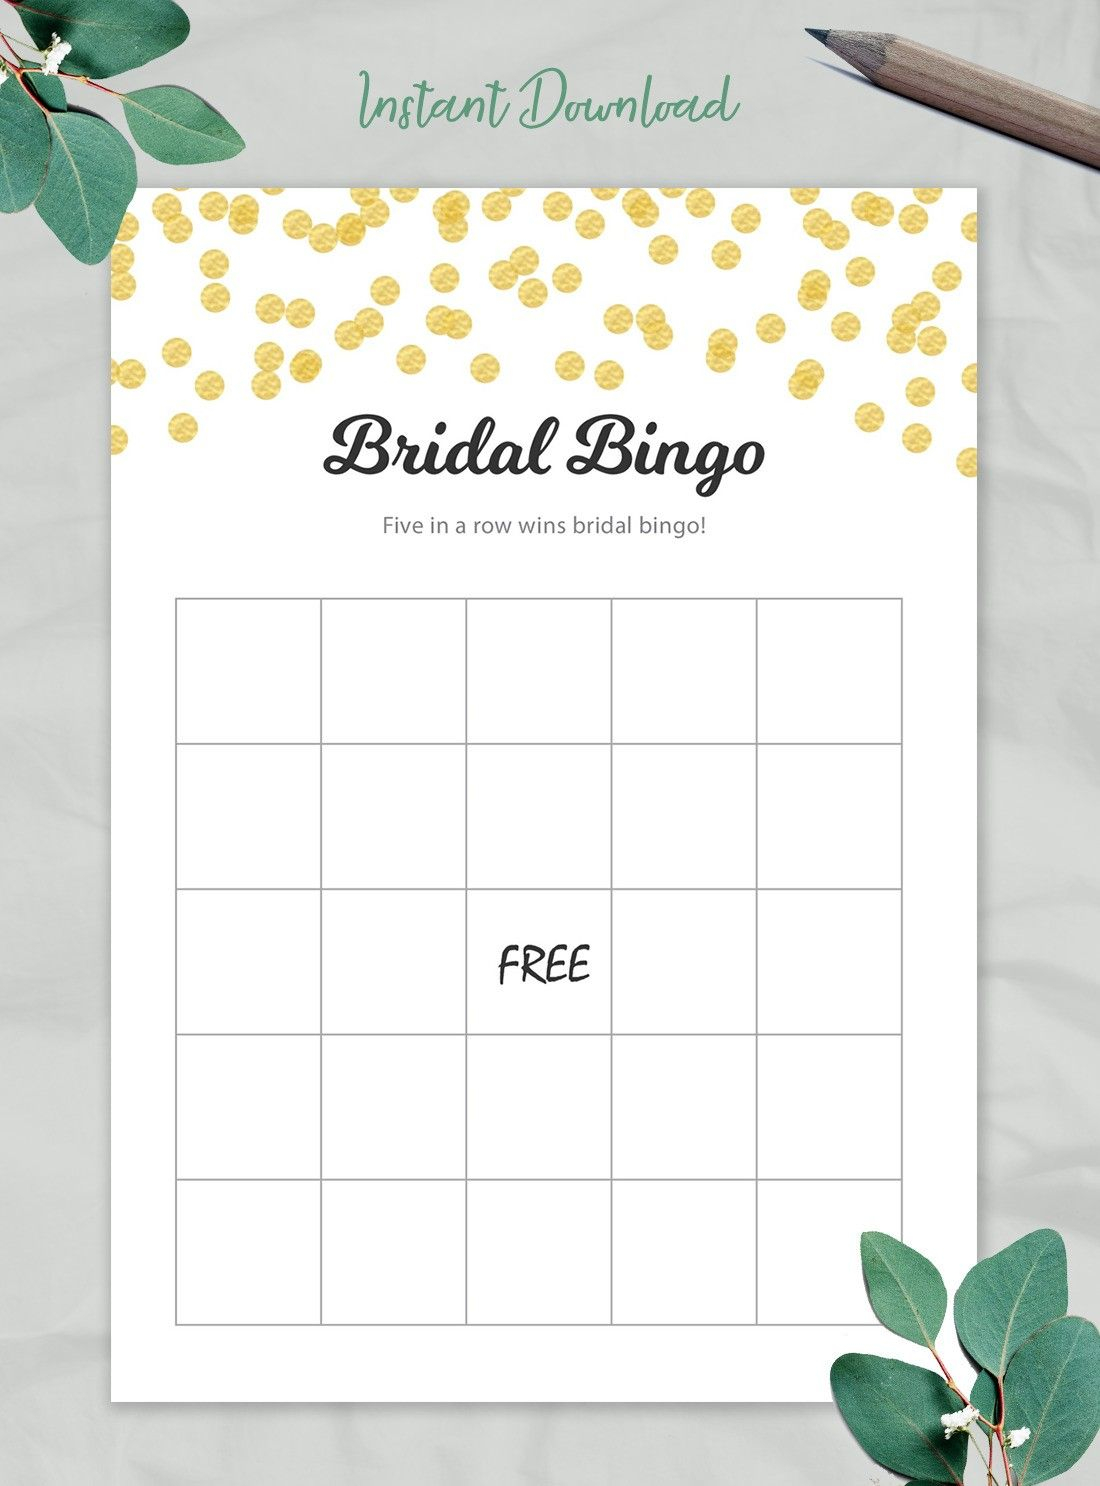 Blank Bridal Bingo Cards Template Empty Bingo Cards Etsy 